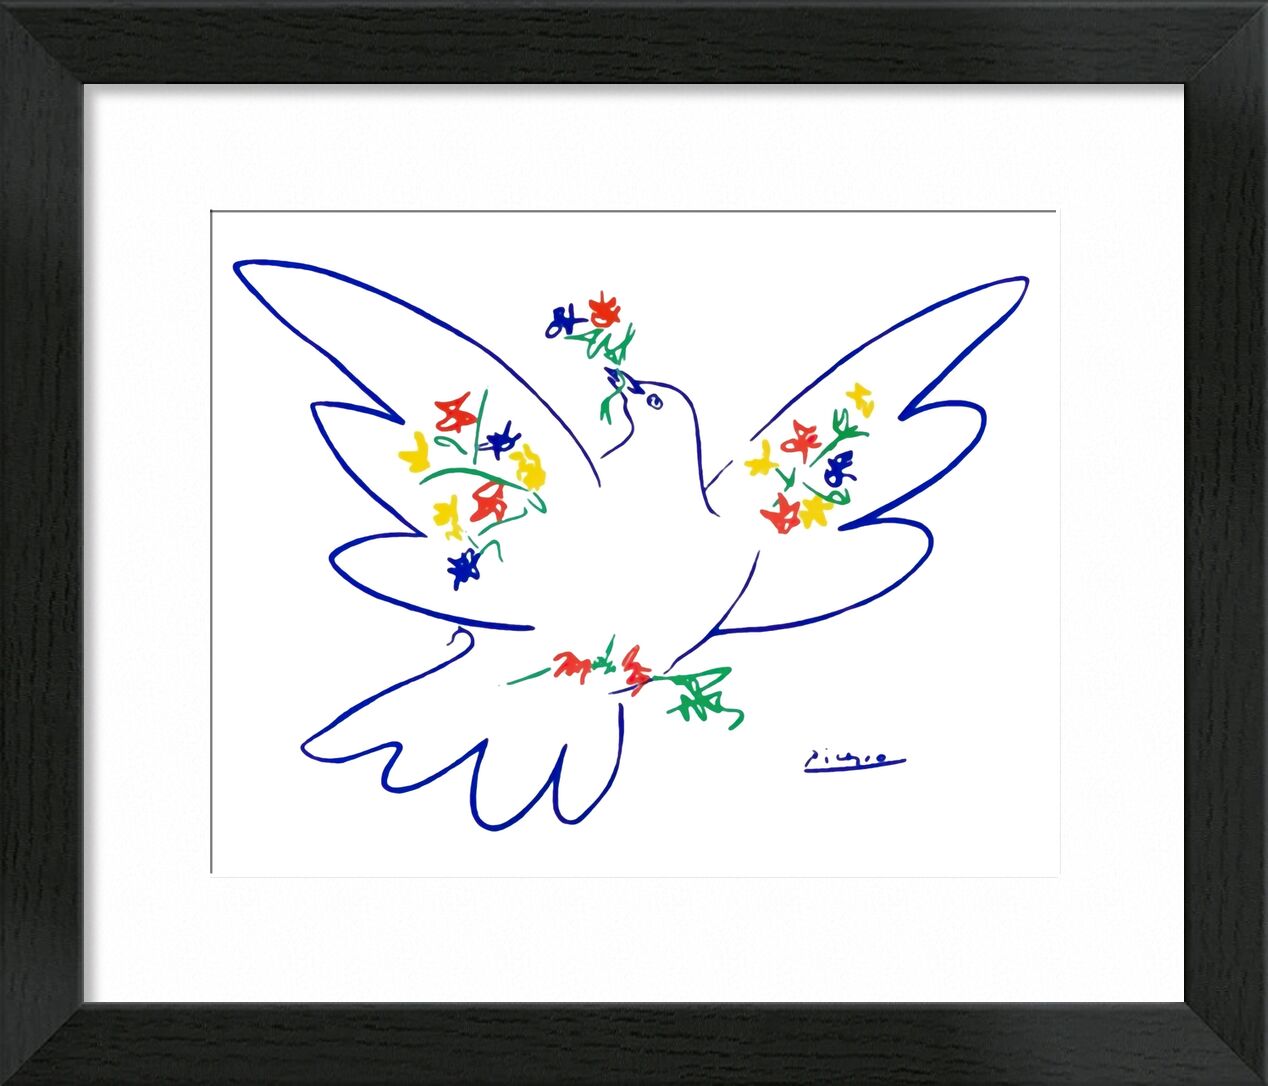 Dove of peace - PABLO PICASSO desde Bellas artes, Prodi Art, PABLO PICASSO, dibujo a lápiz, dibujo, amor, paz, paloma